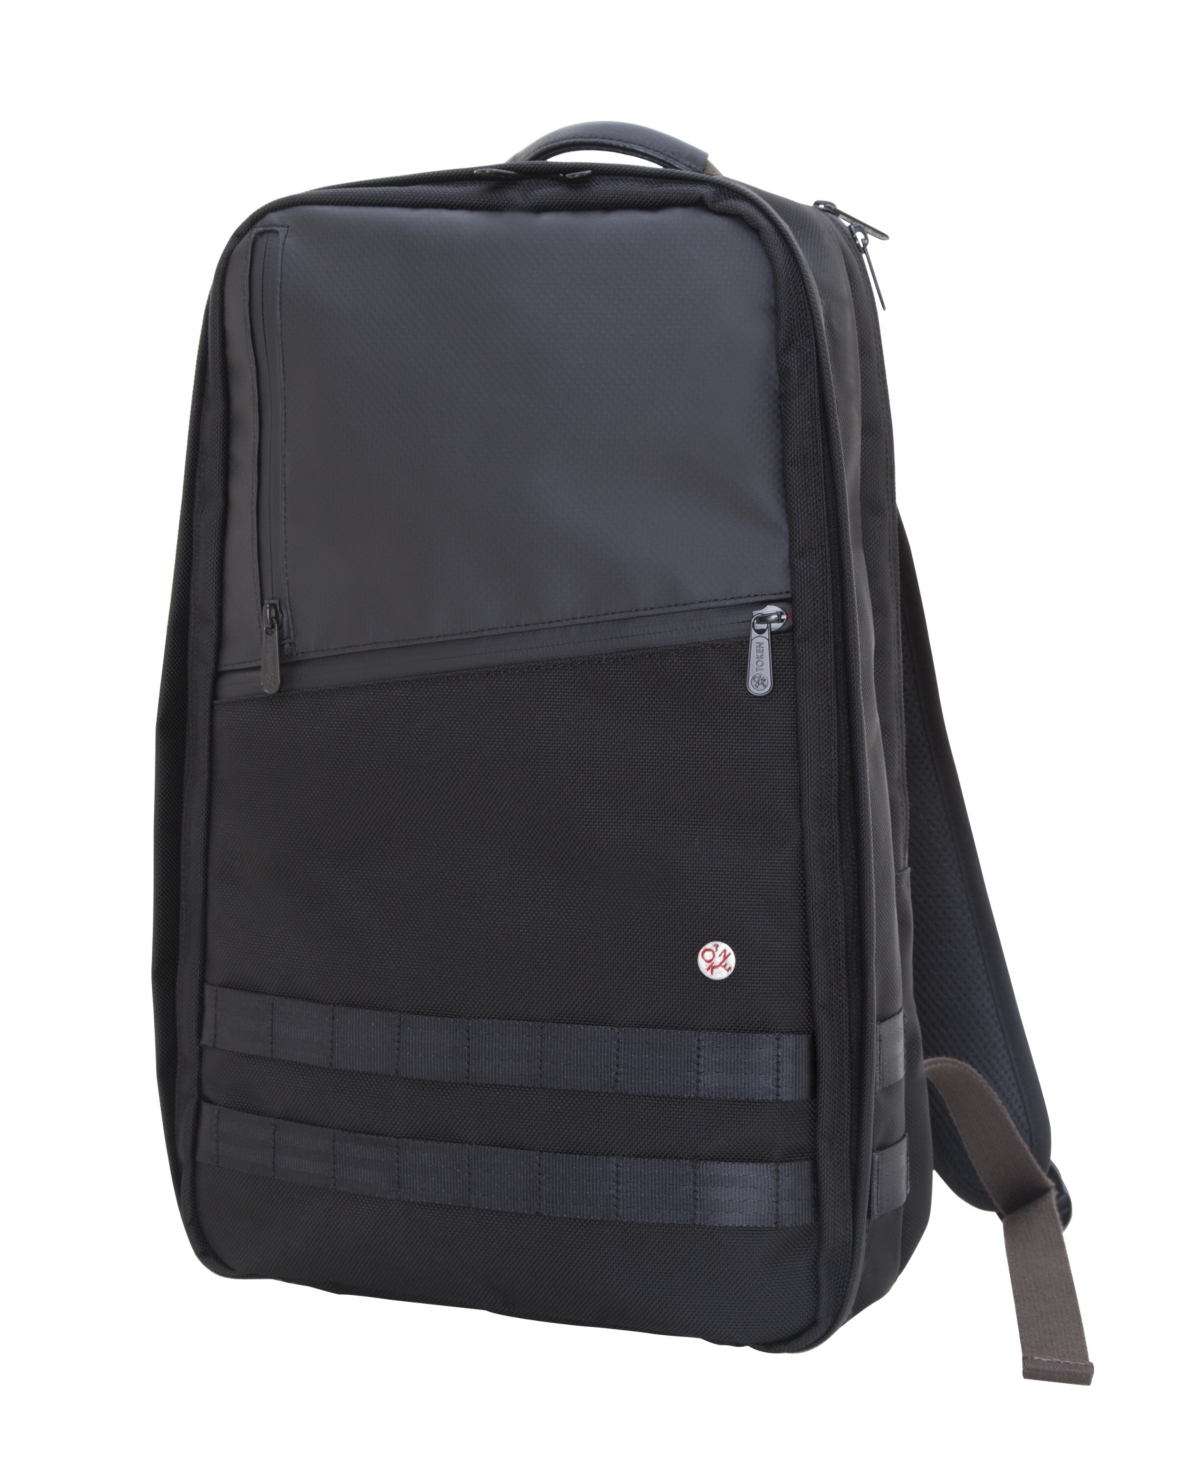 Grand Army Medium Backpack - Olive